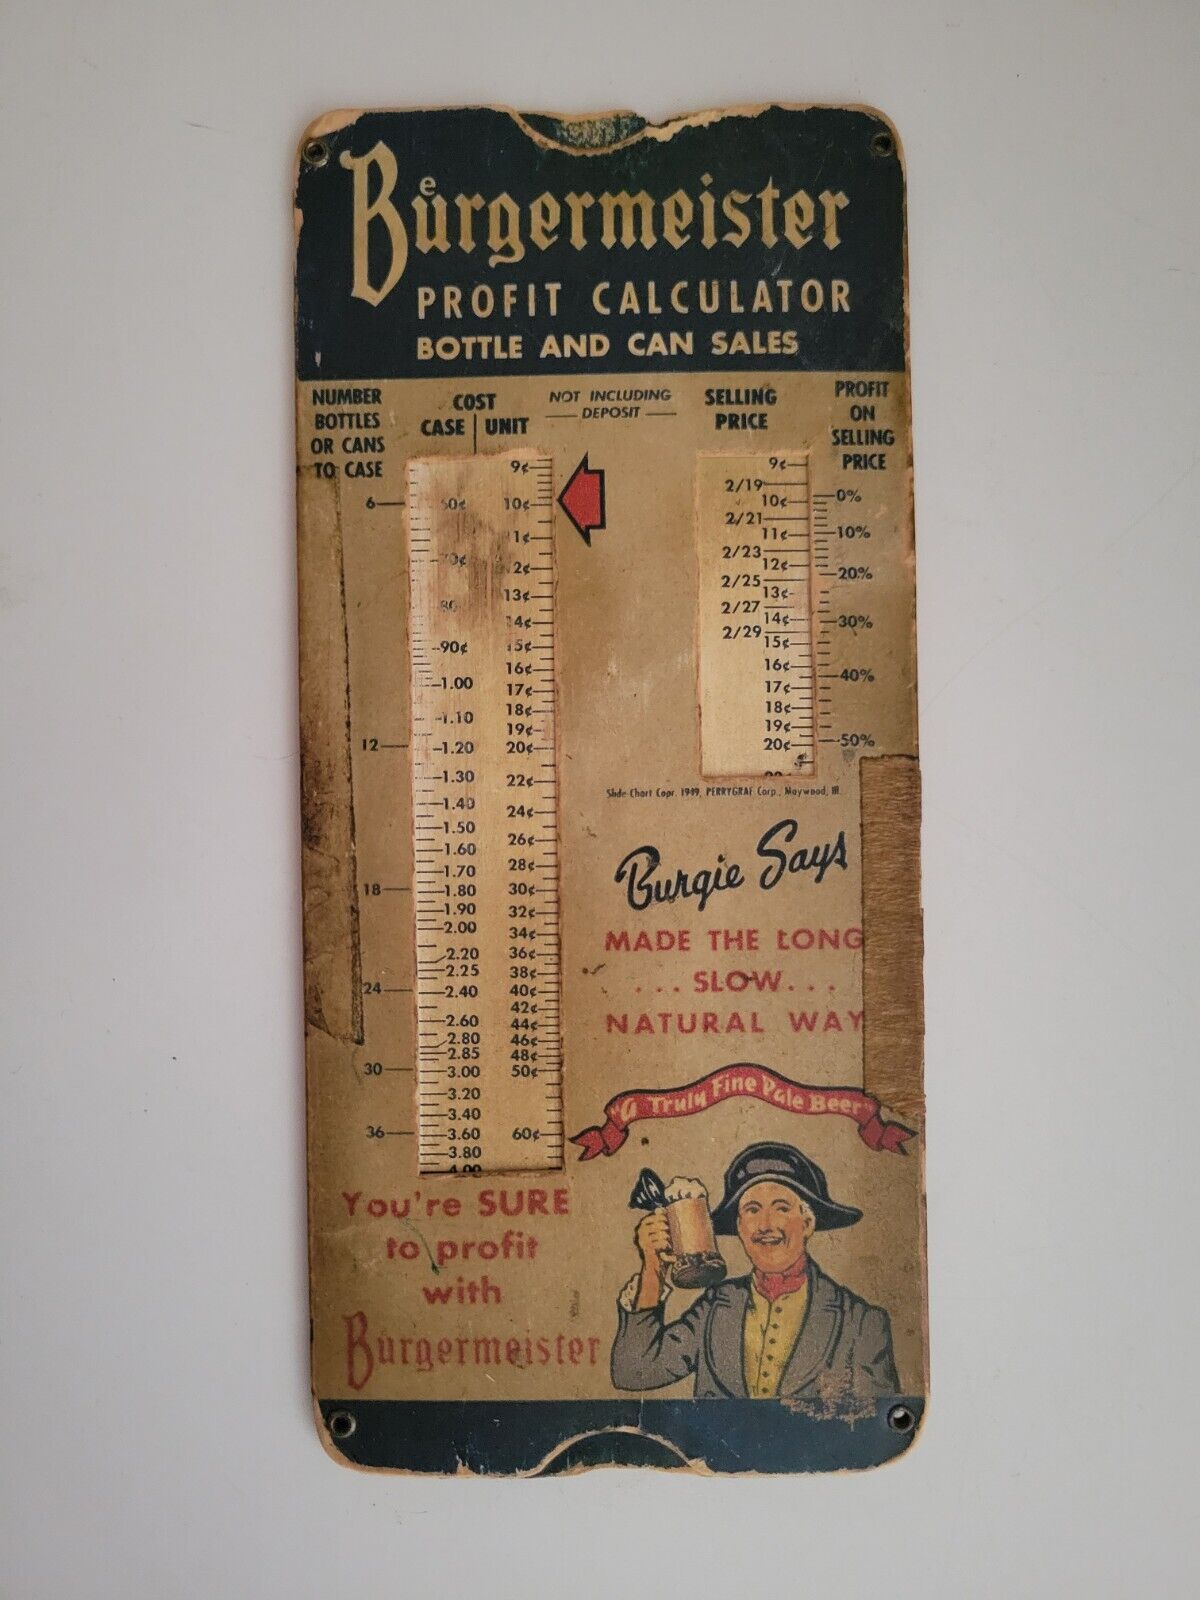 RARE Vintage Burgermeister Beer Profit Calculator For Bottle And Can Sales